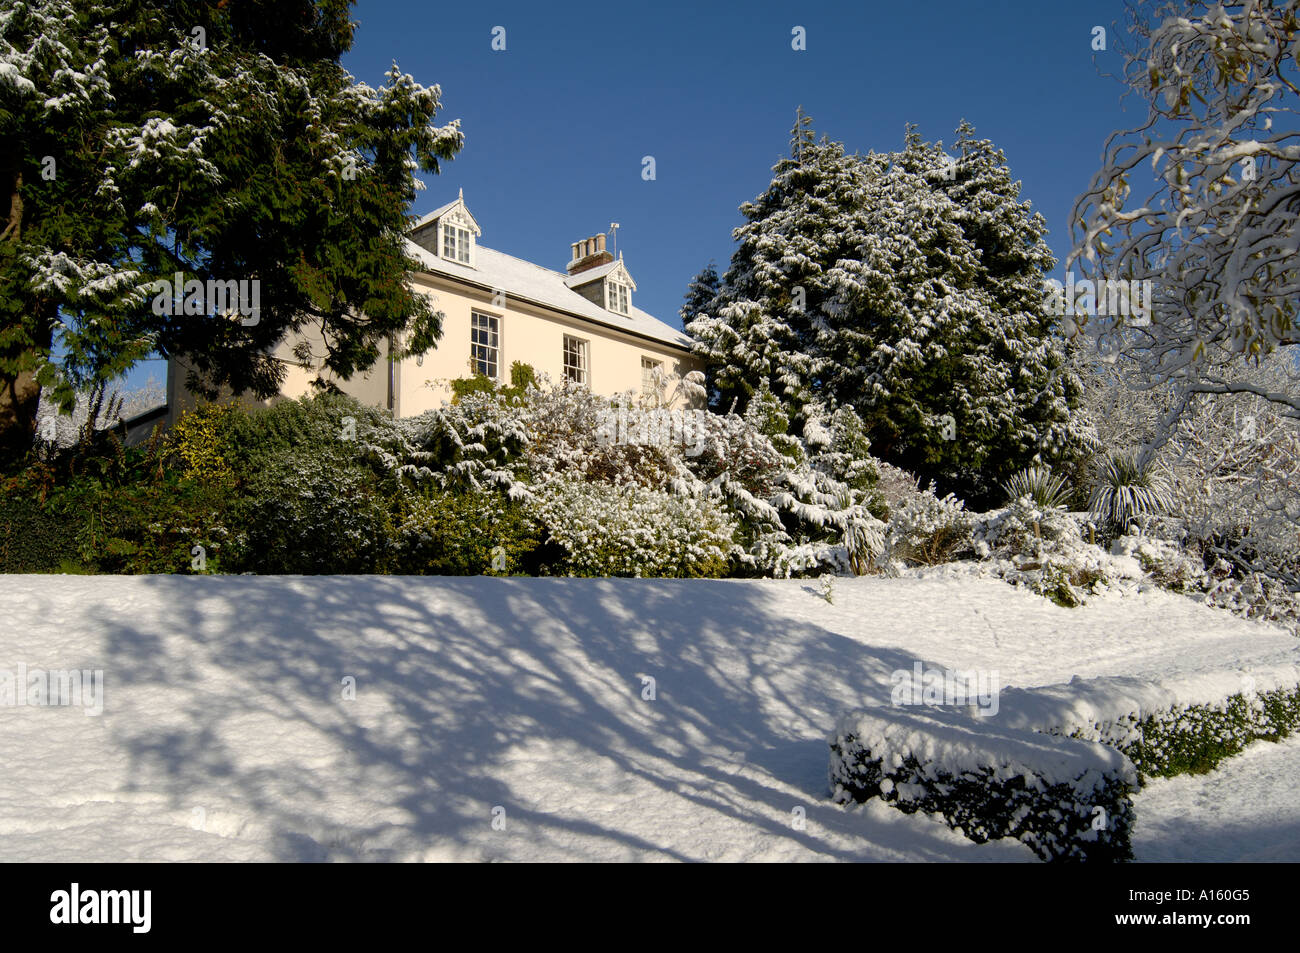 A Georgian house and garden after a heavy snow fall with sun blue sky Stock Photo